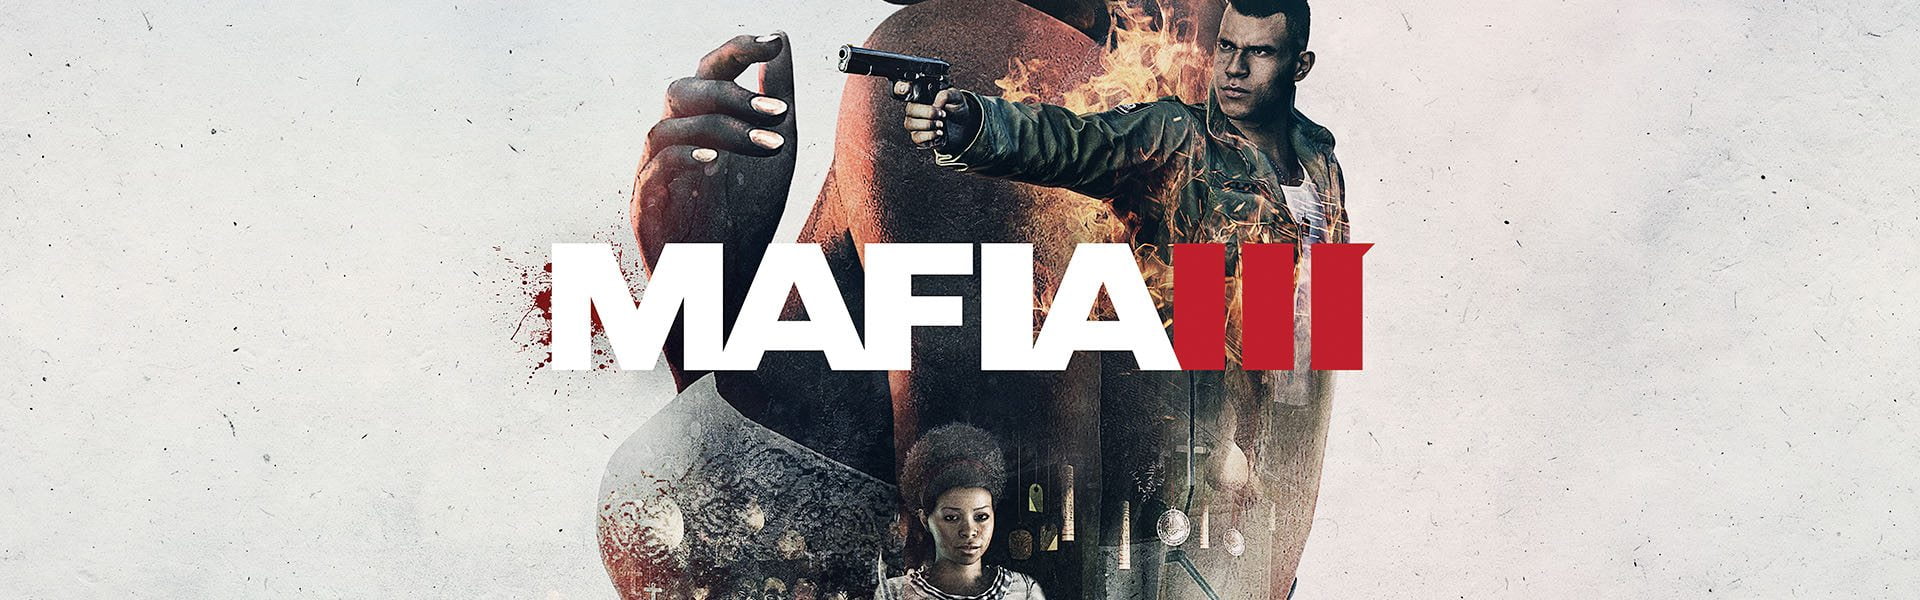 Mafia III Review 9